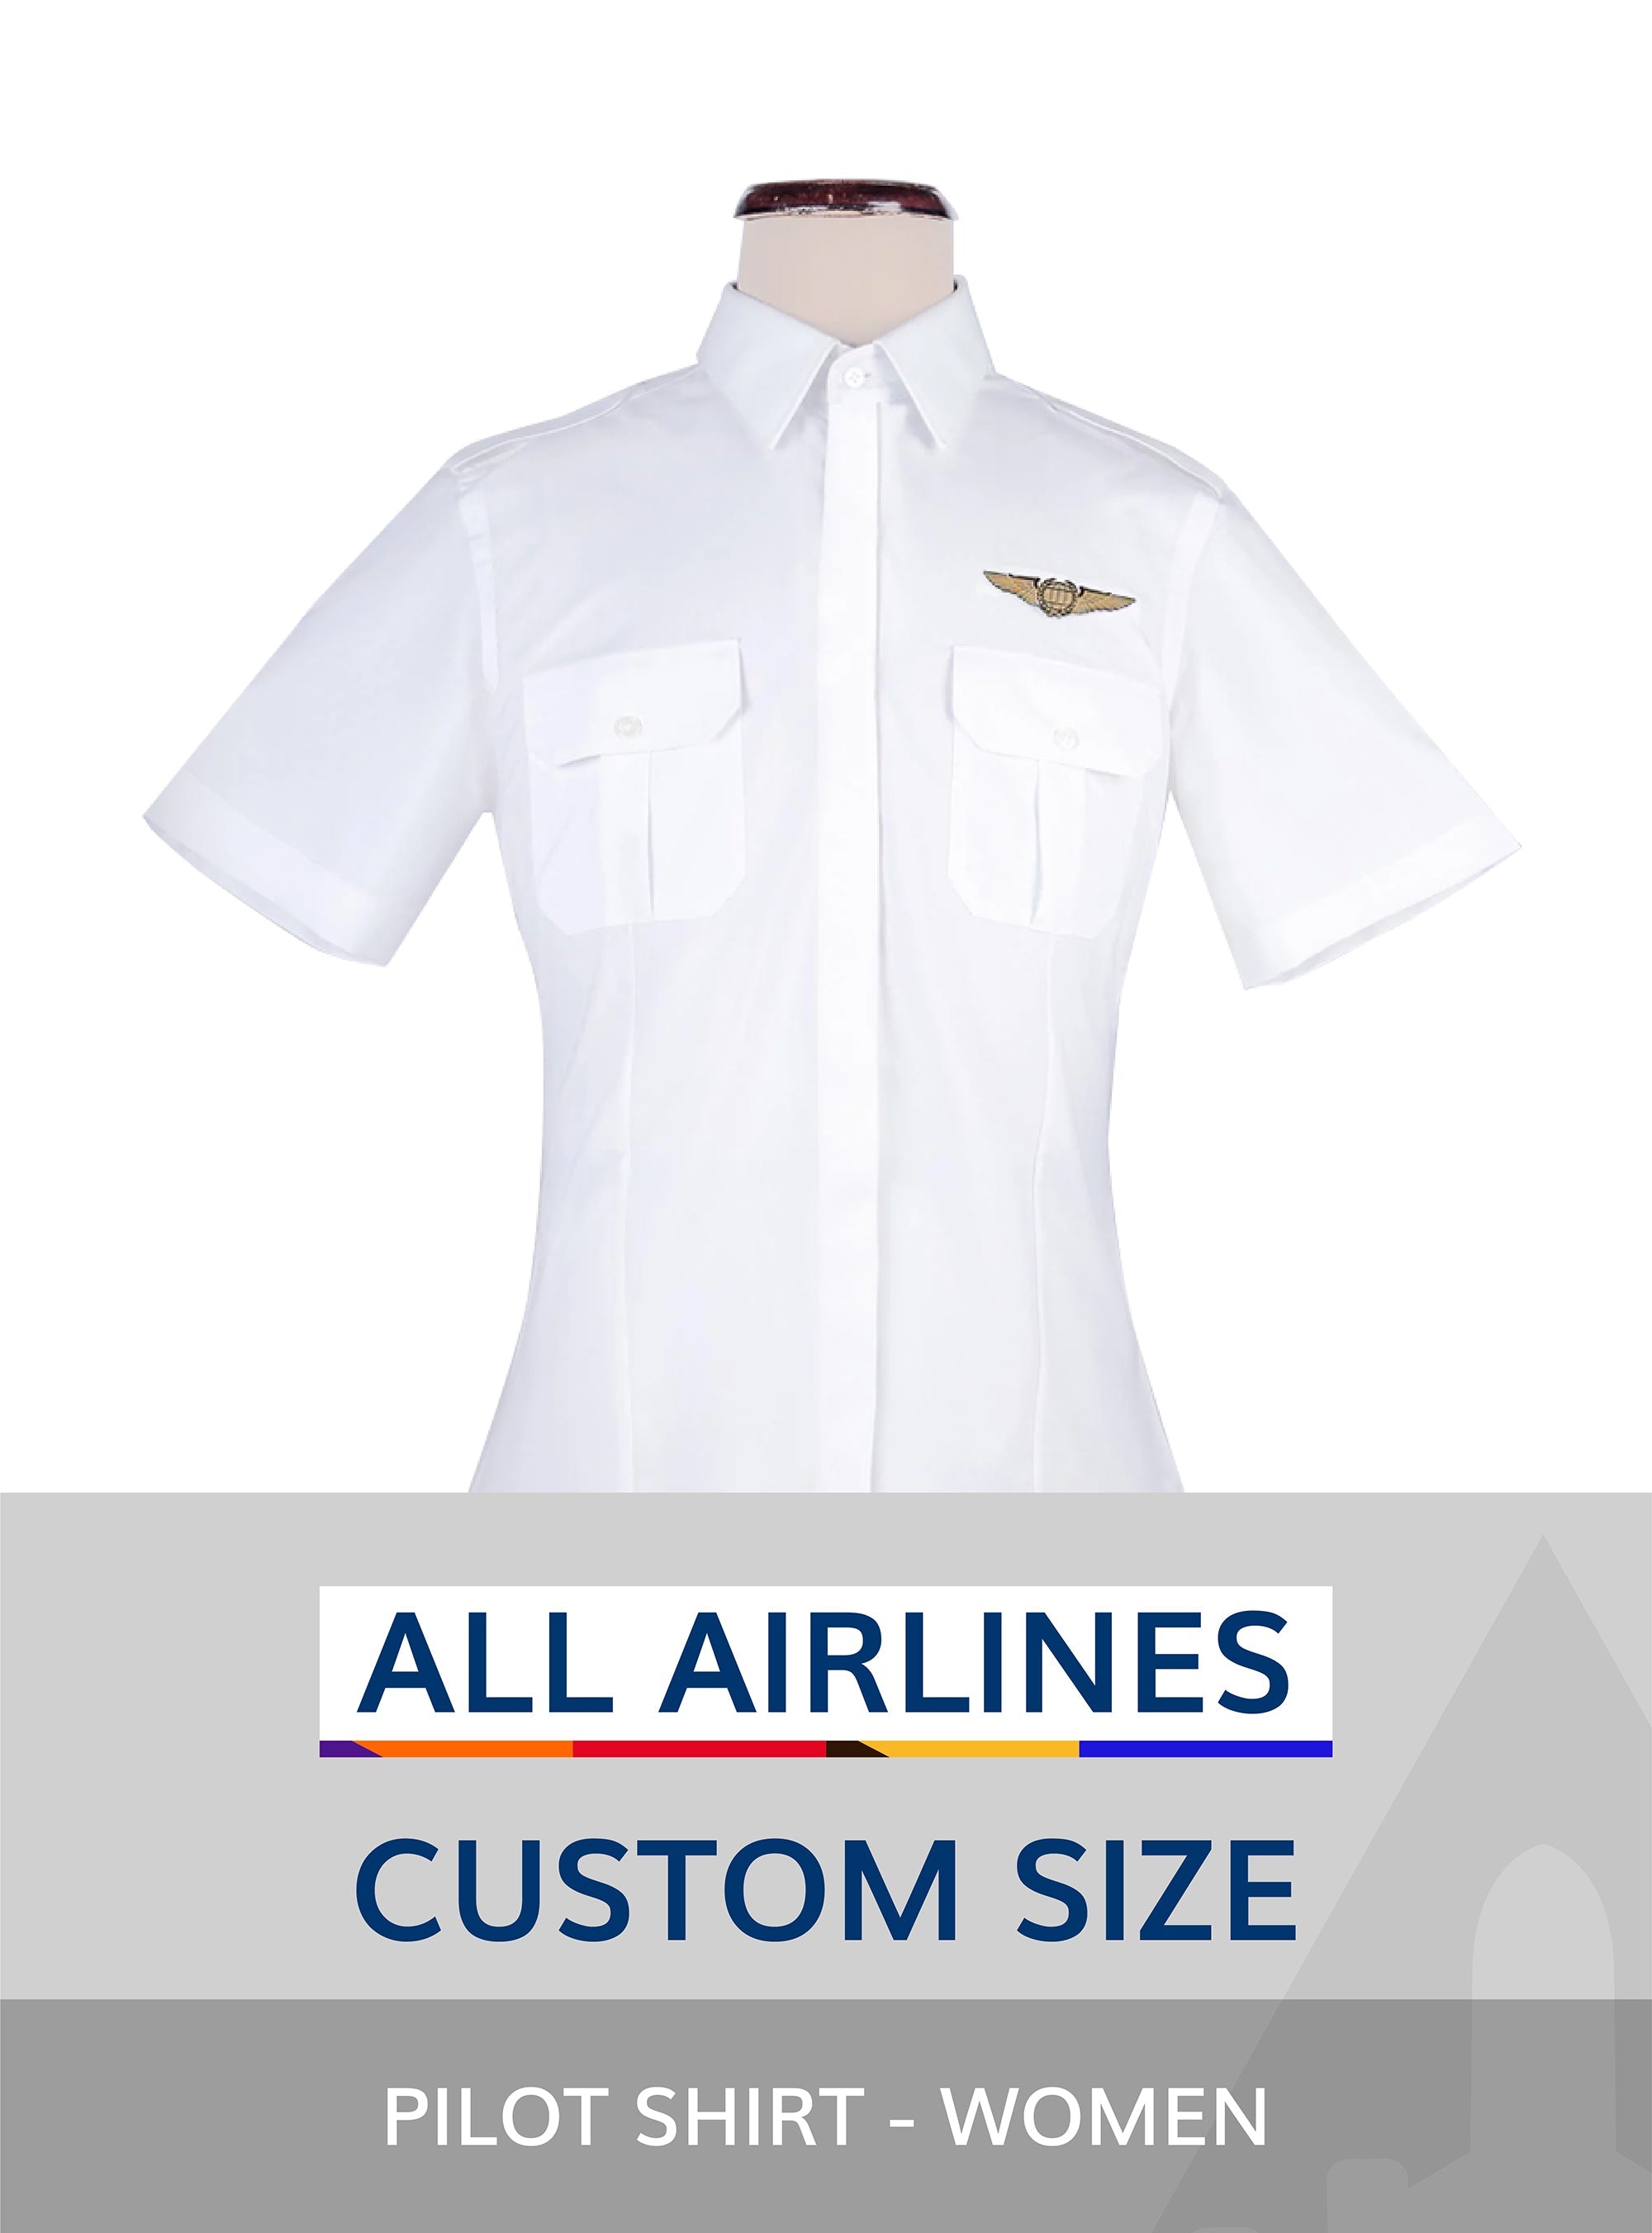 All Airlines custom size pilot shirt for women